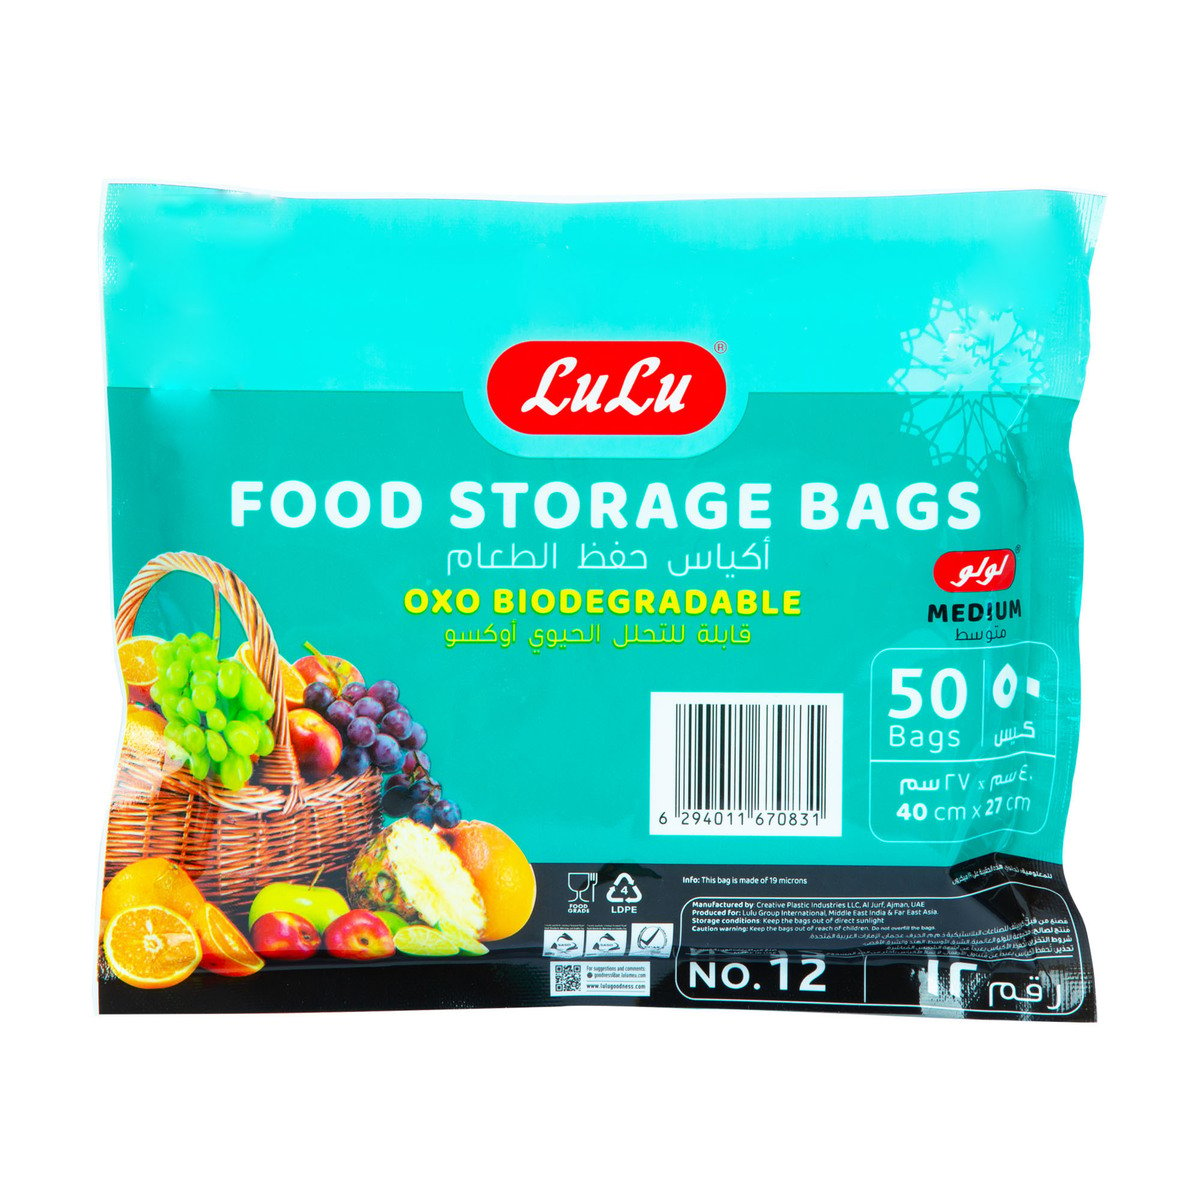 LuLu Food Storage Bags Medium Size, 40cm x 27cm No.12, 50 pcs